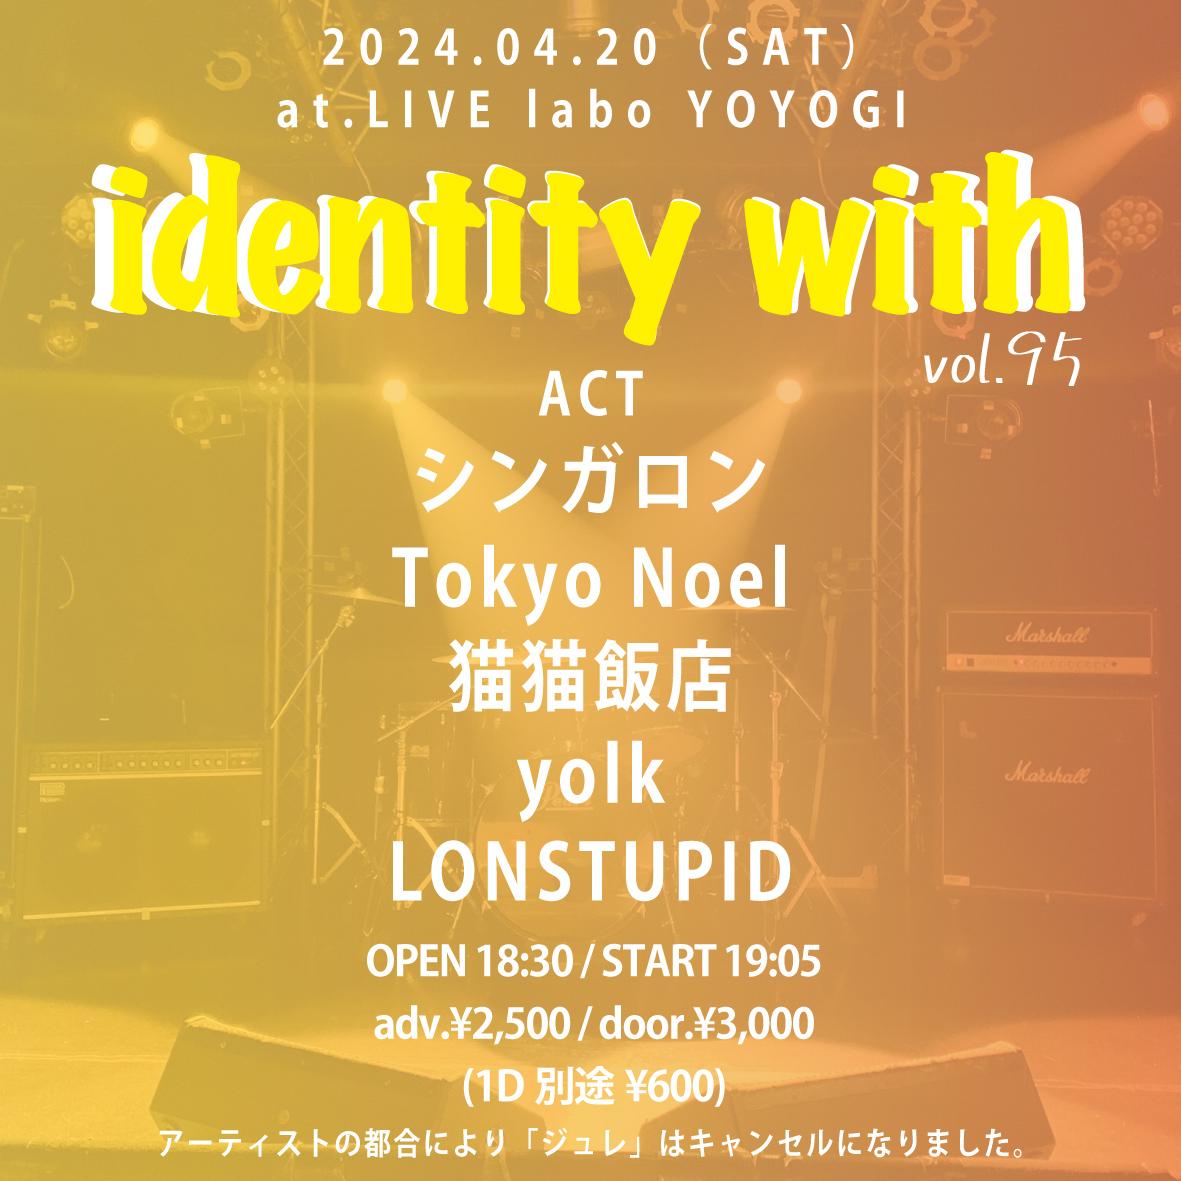 identity with vol.95